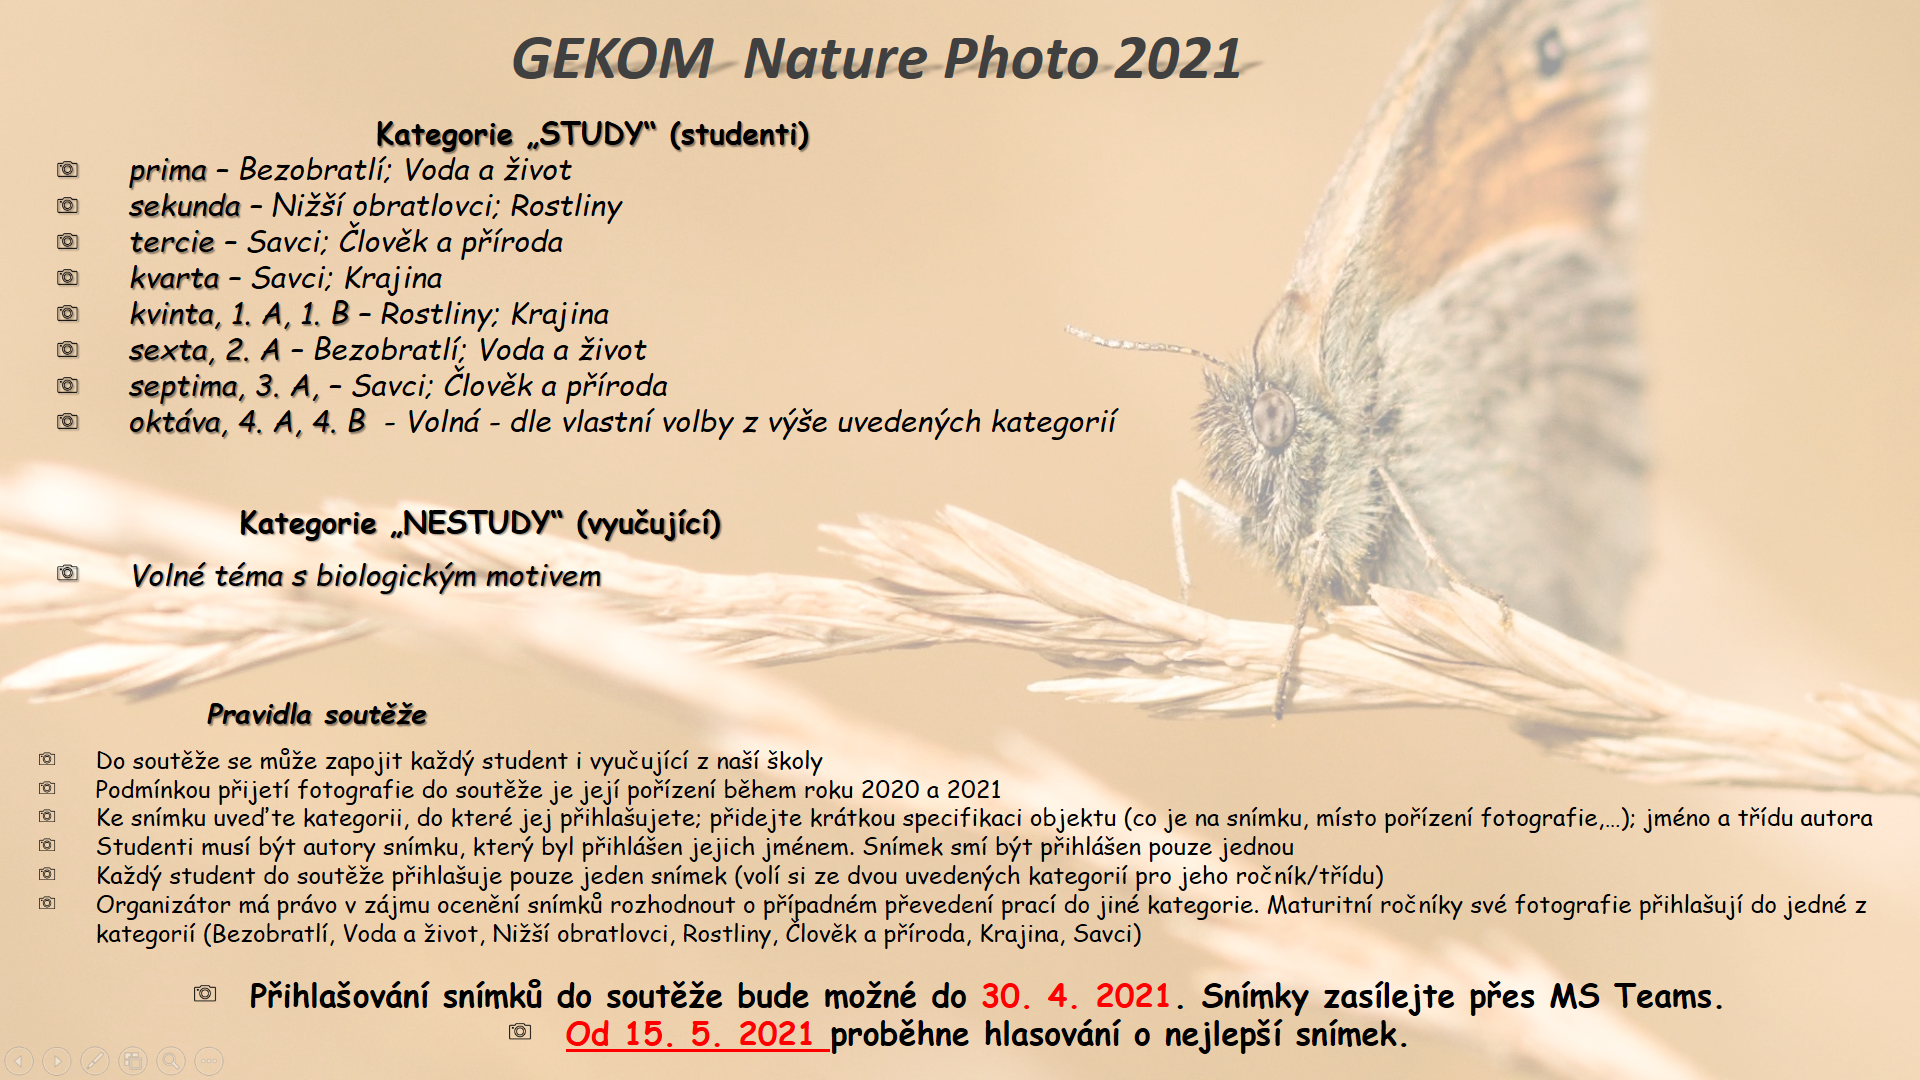 GEKOM Nature Photo 2021 - leták